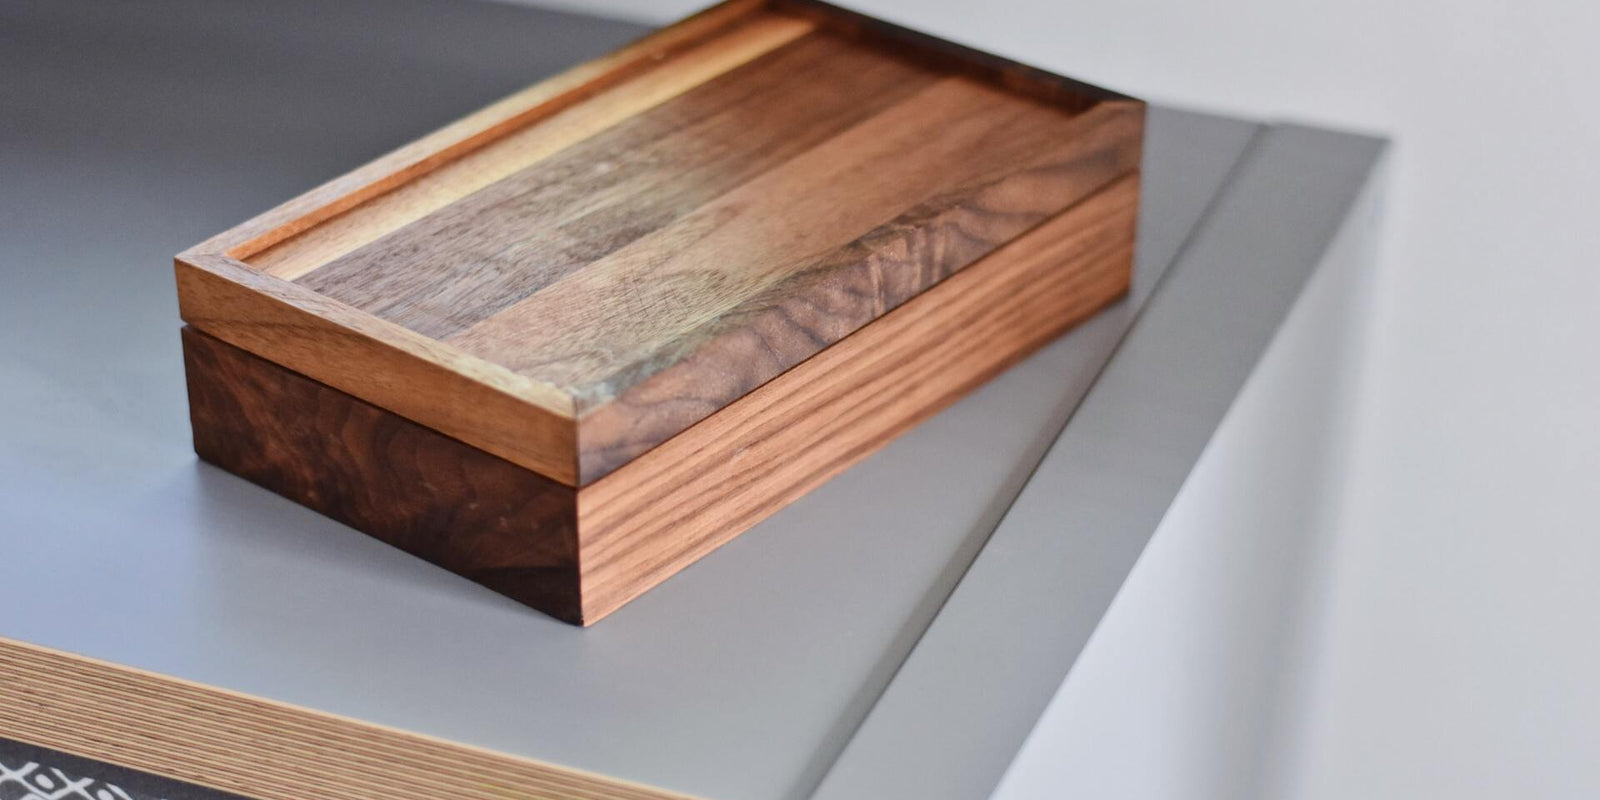 Handmade Wooden carving box for storage Premium Wooden storage box set of 2